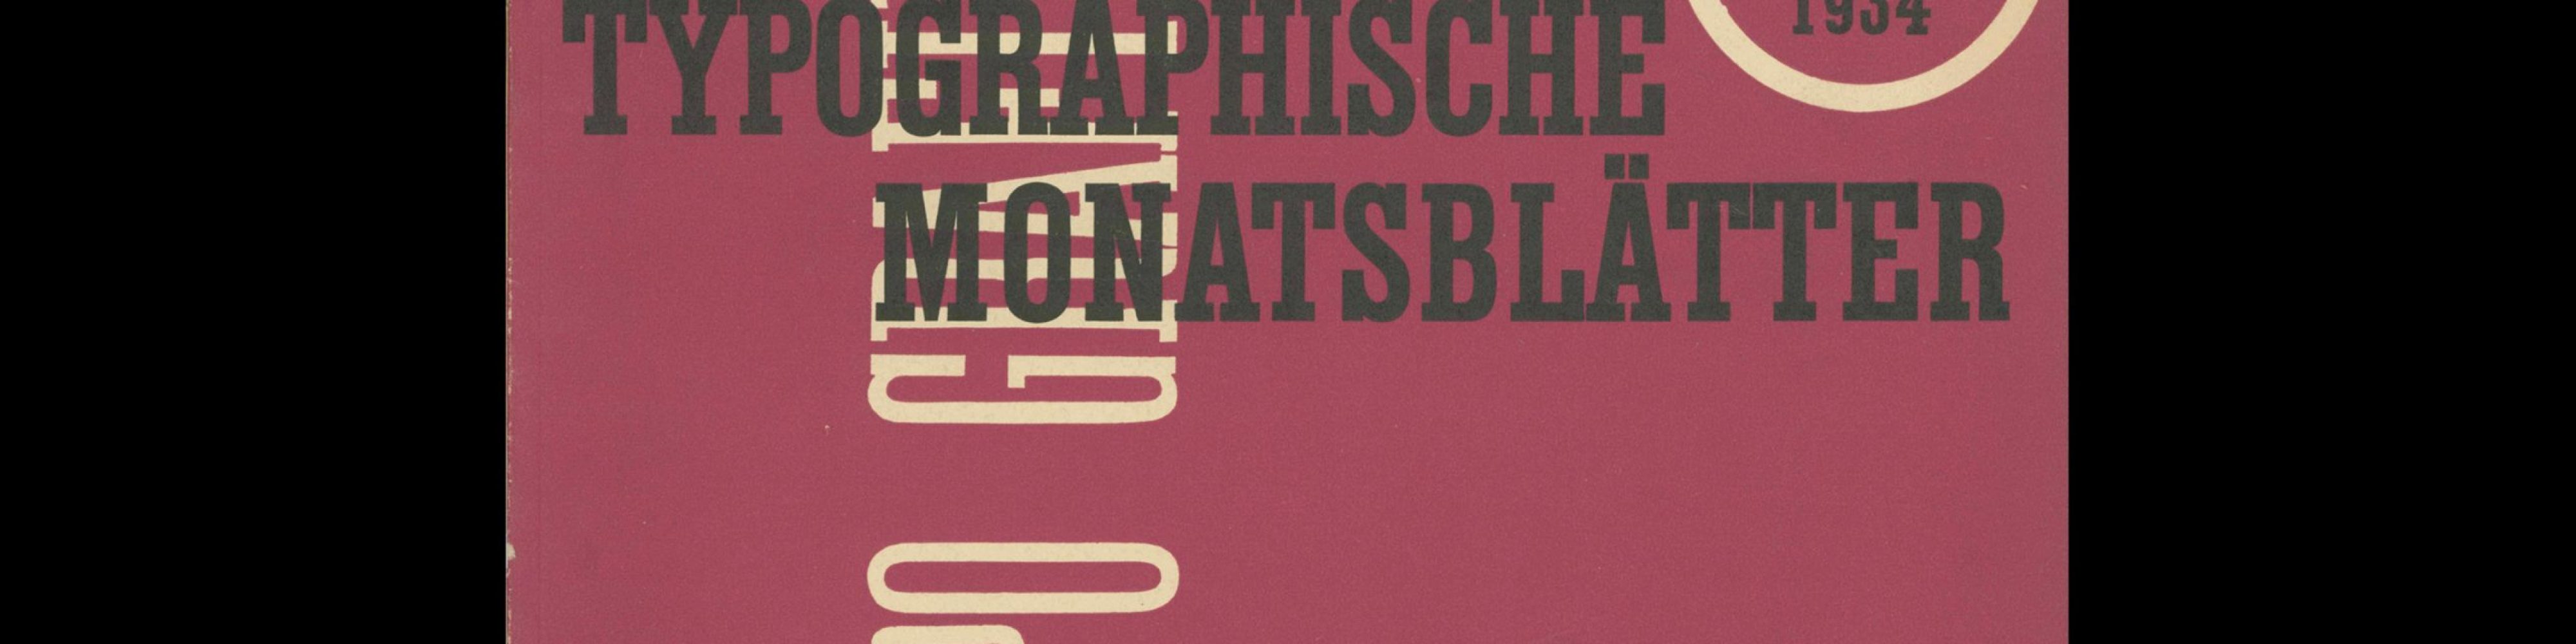 Typografische Monatsblätter, 7, 1934